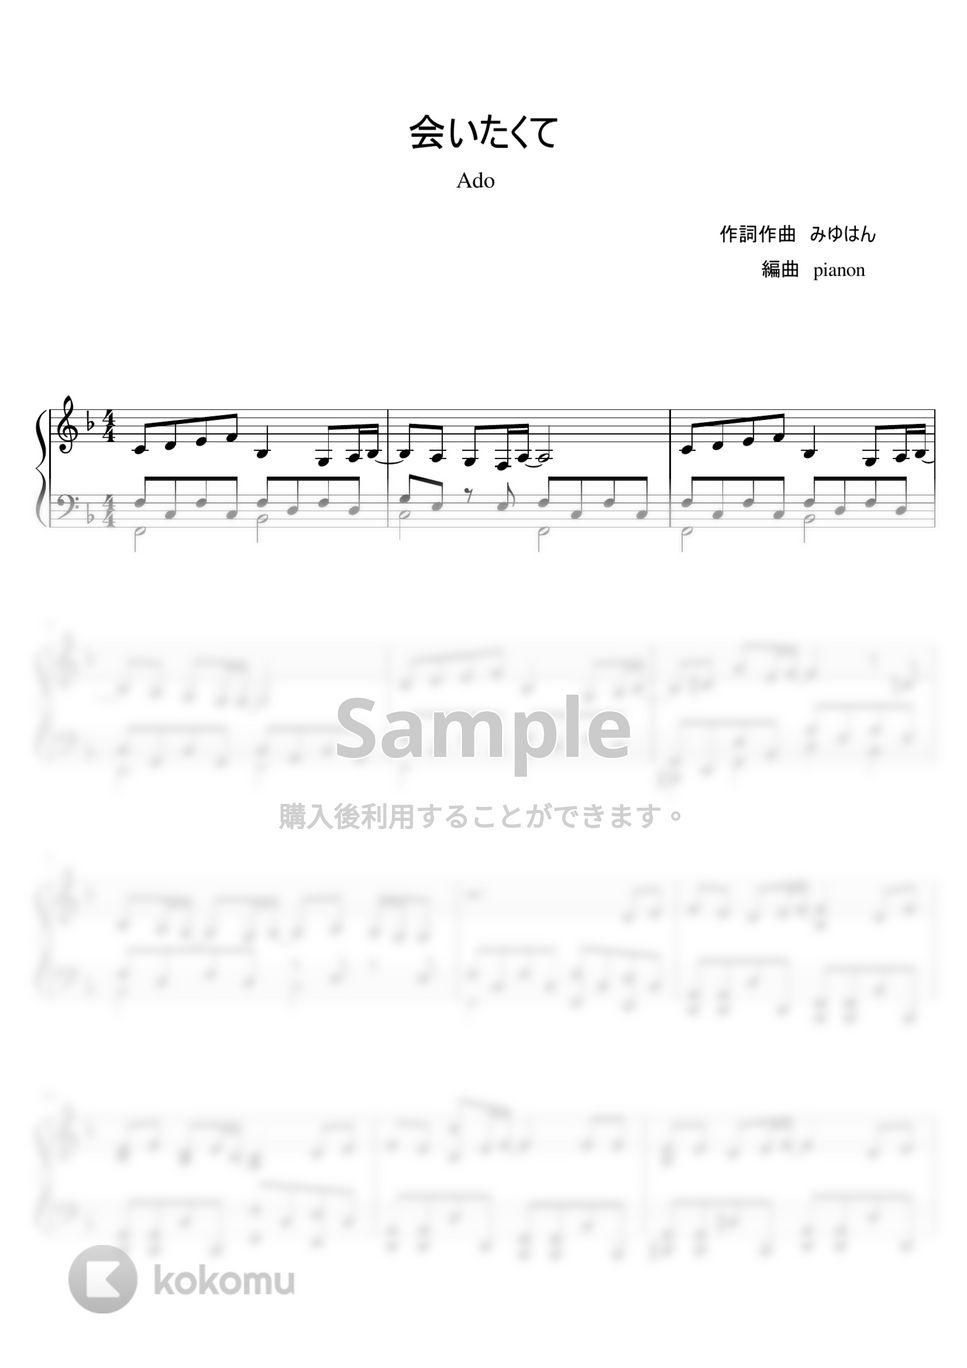 Ado - 会いたくて (ピアノソロ / ピアノ中級) by pianon楽譜